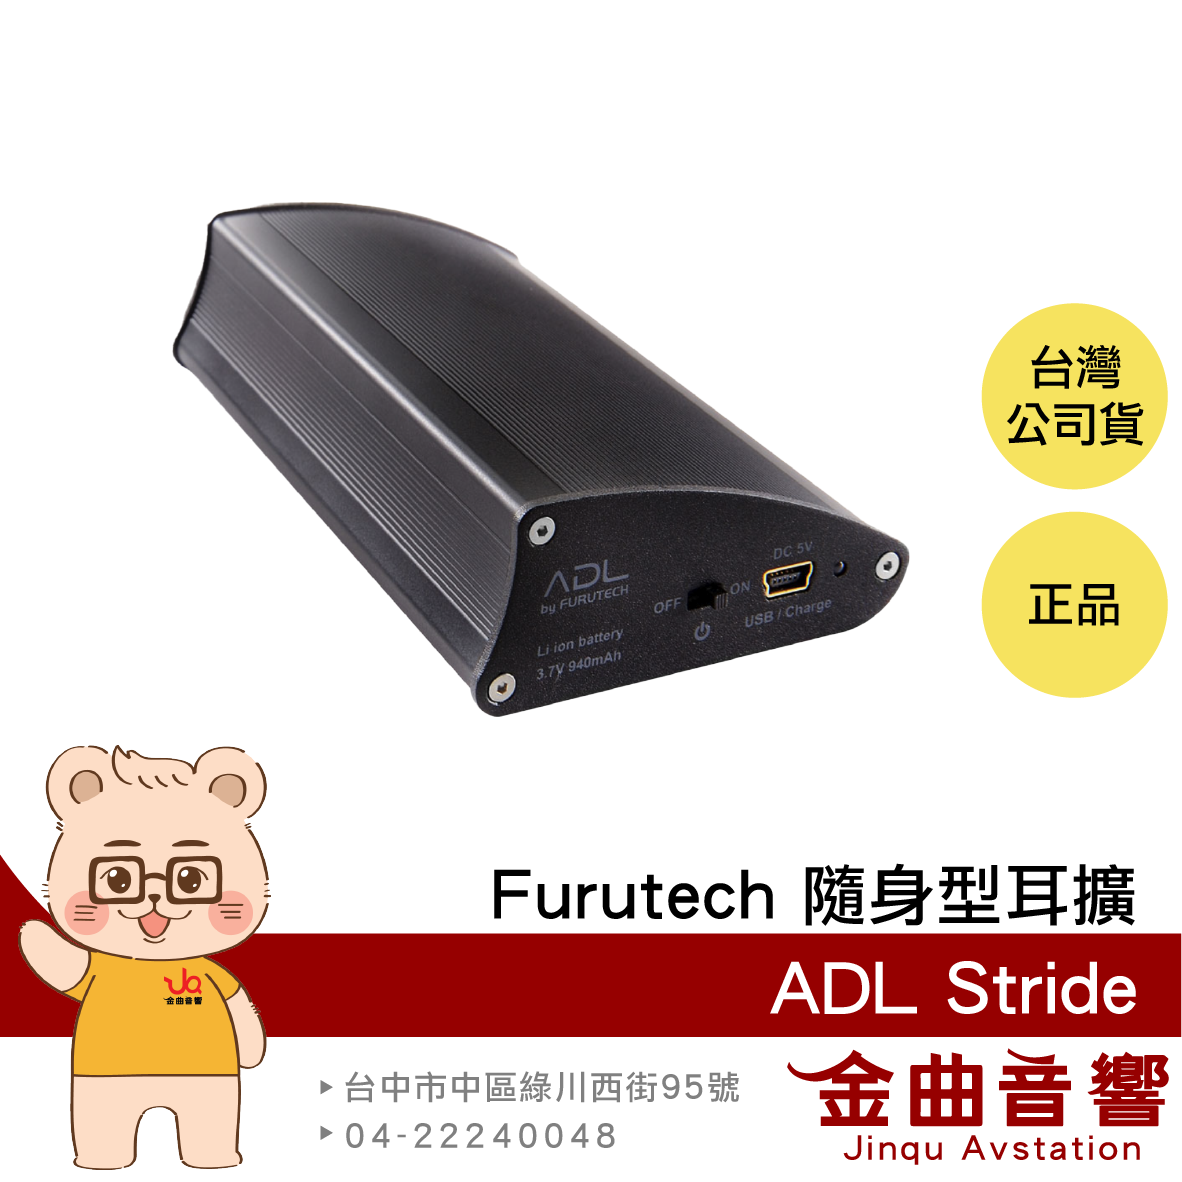 FURUTECH 古河 ADL Stride USB DAC 黑色 輕巧隨身型 耳擴 | 金曲音響